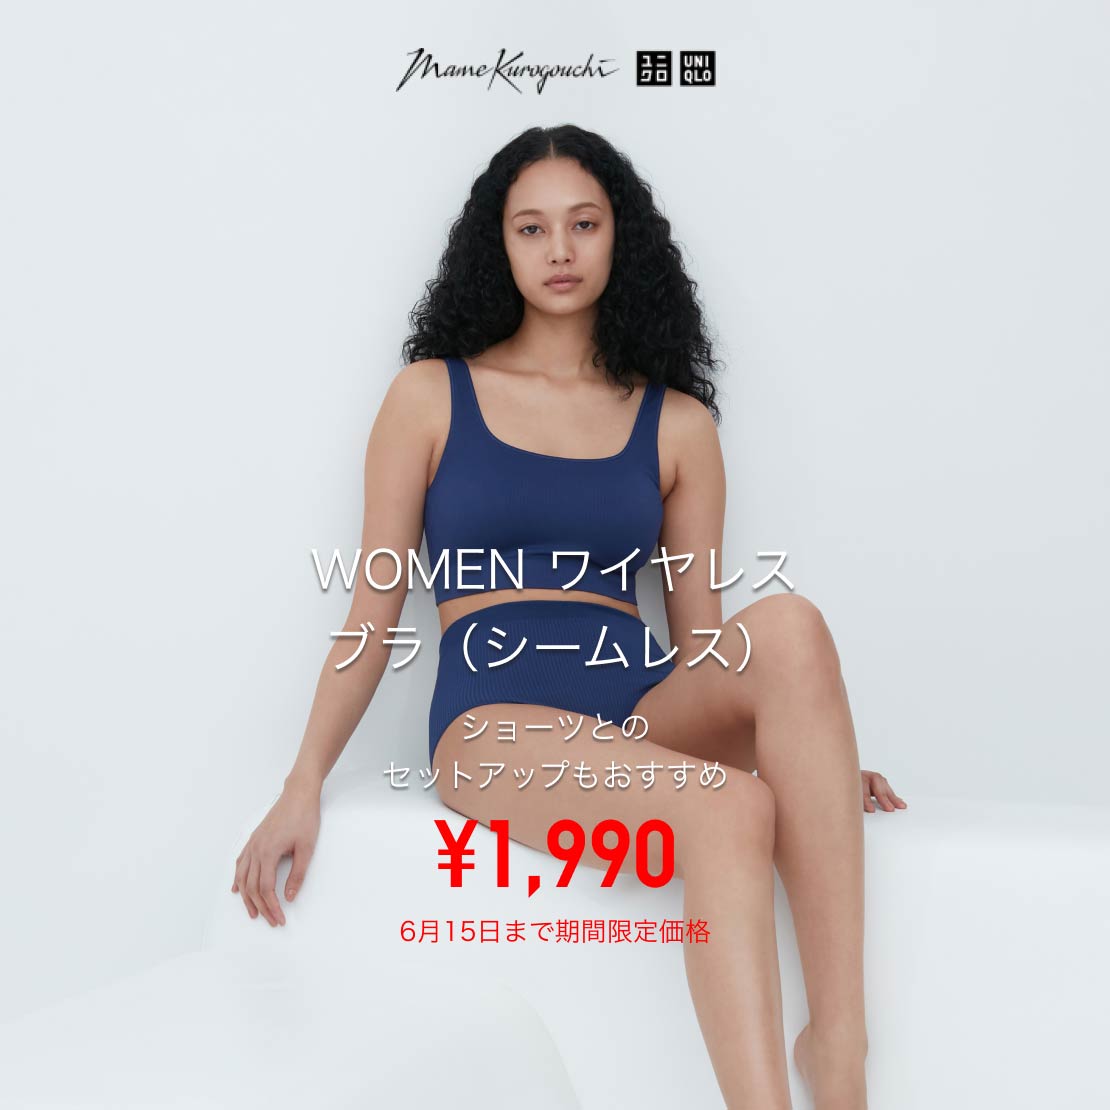 Uniqlo and Mame Kurogouchi 2023年 春夏コレクション
WOMEN ワイヤレスブラ（シームレス） ¥1,990 6月15日まで期間限定価格